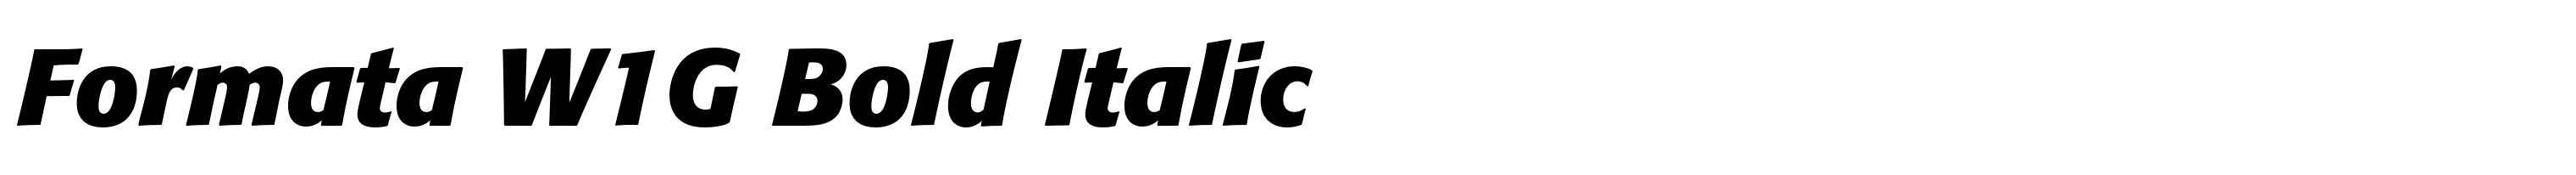 Formata W1G Bold Italic